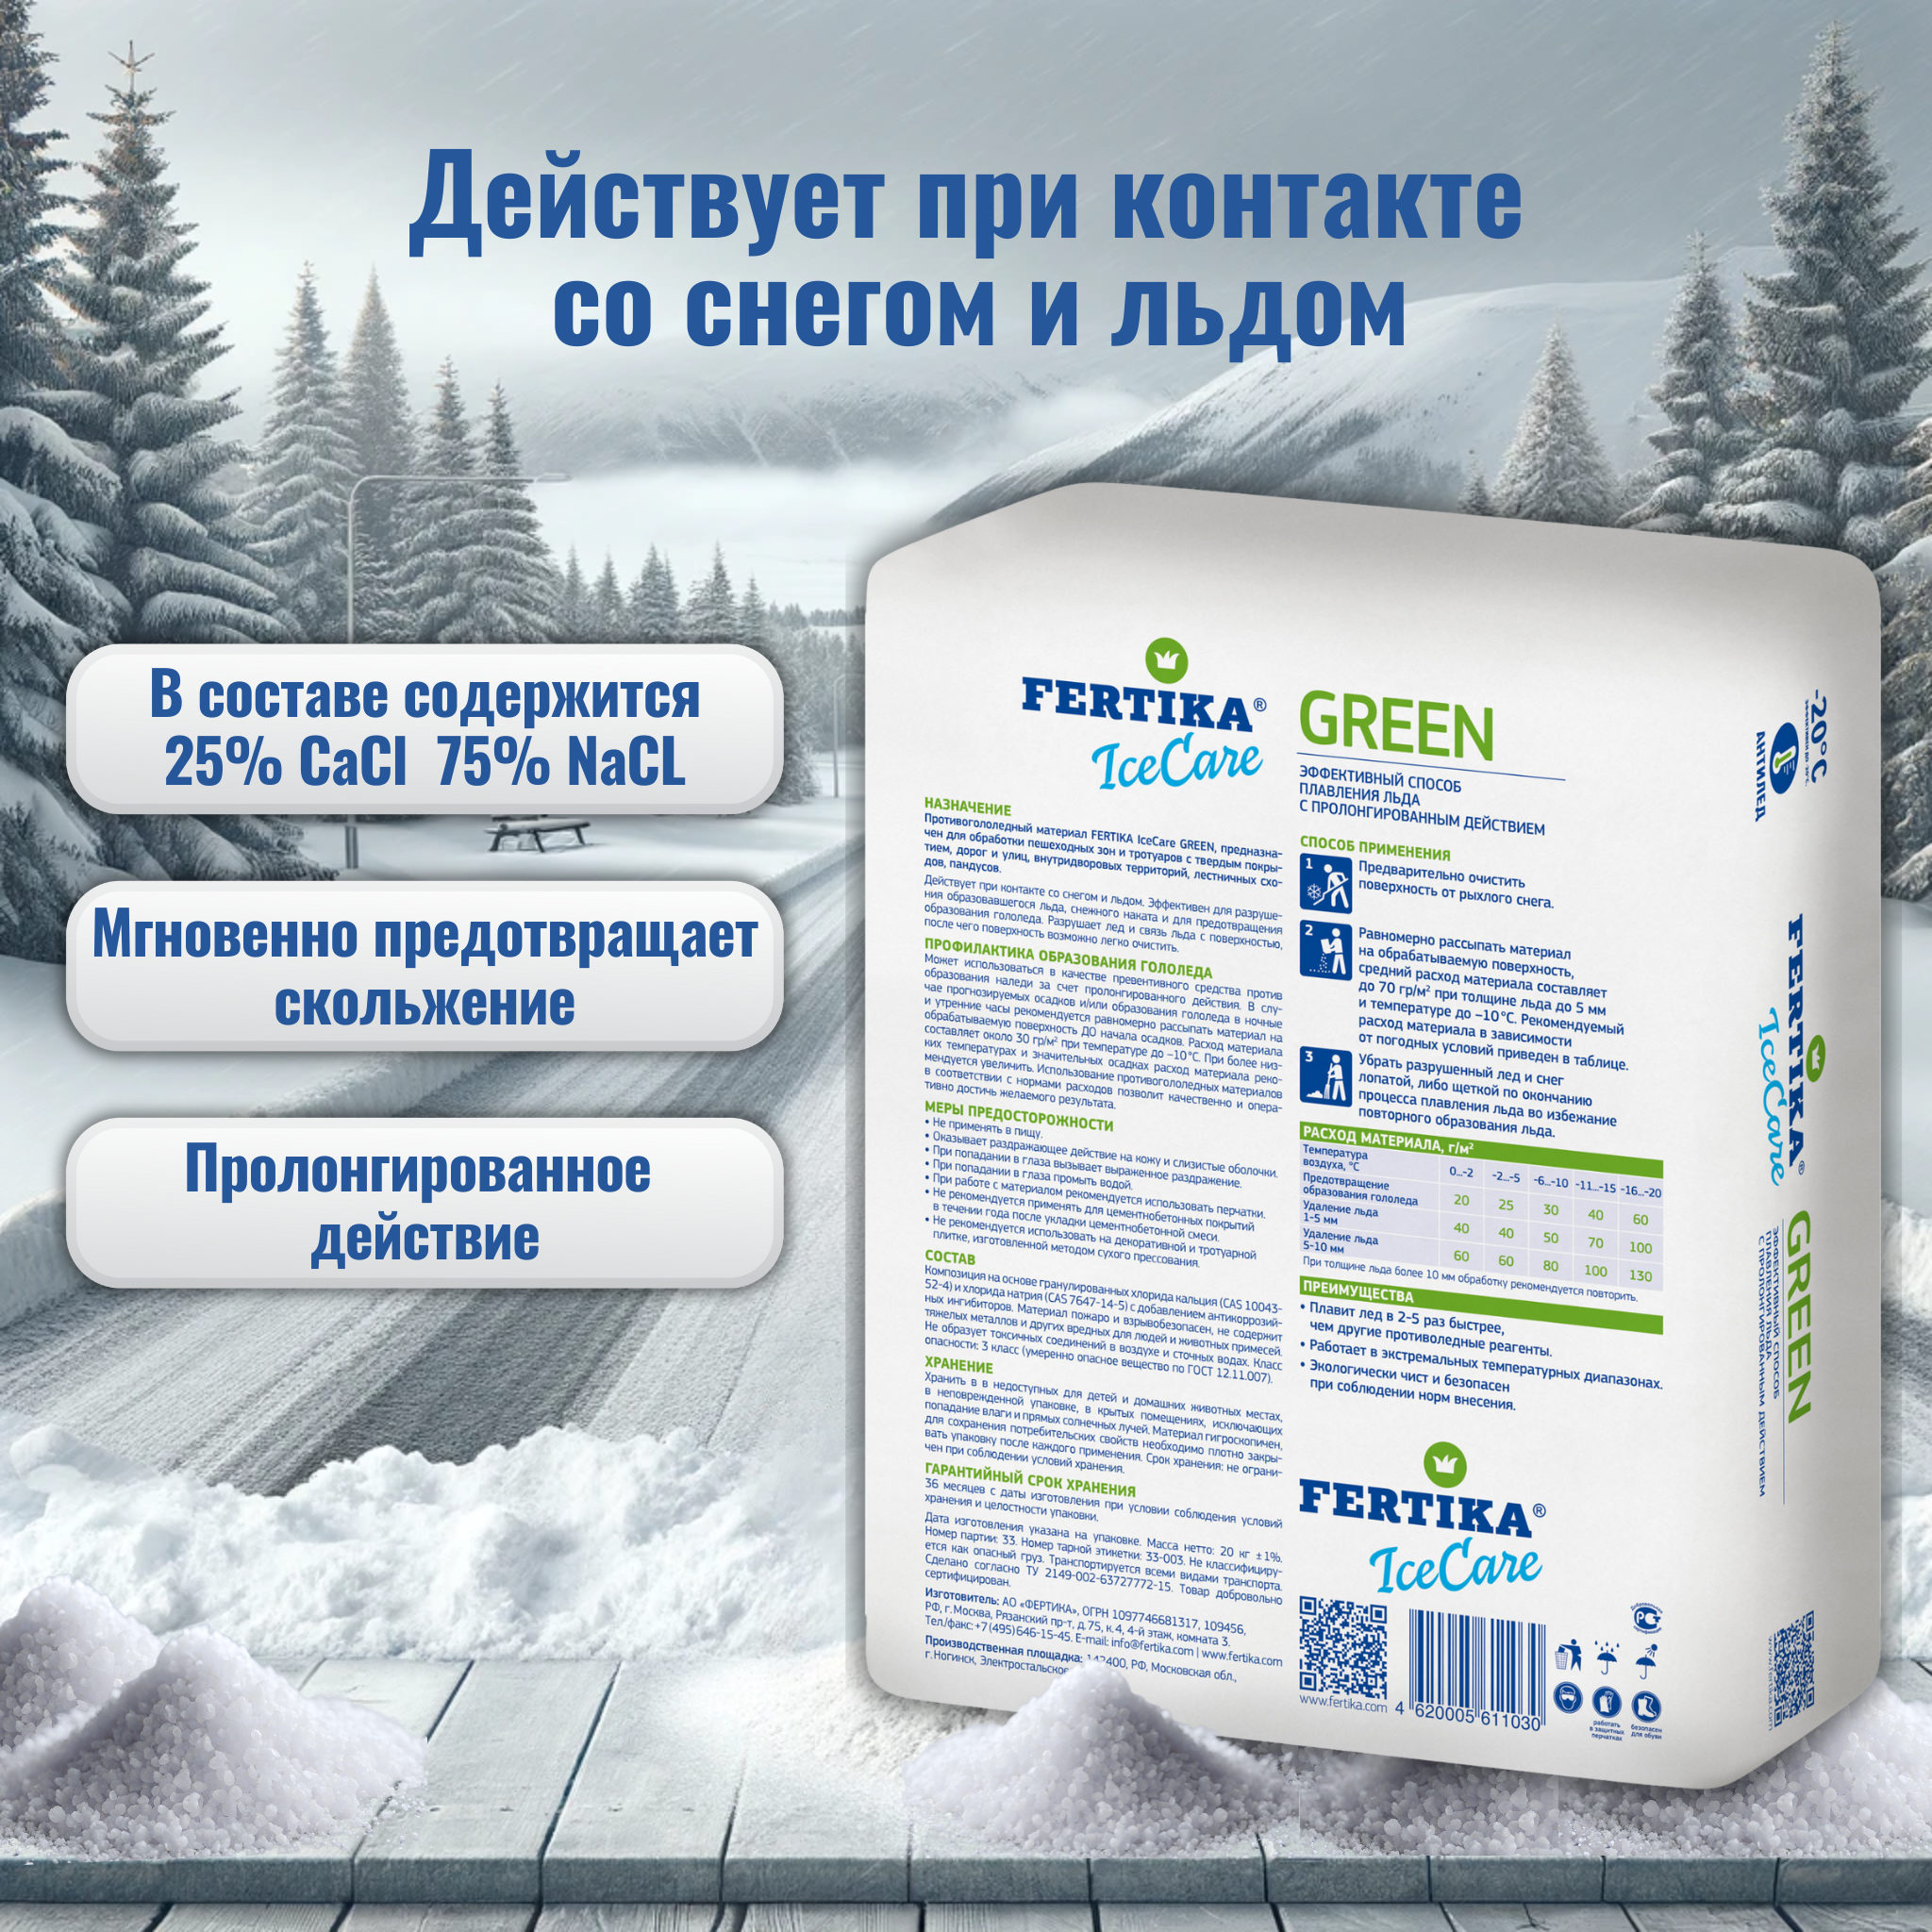 Противогололедный реагент 20 кг. Fertika IceCare GREEN, антигололед - фотография № 2